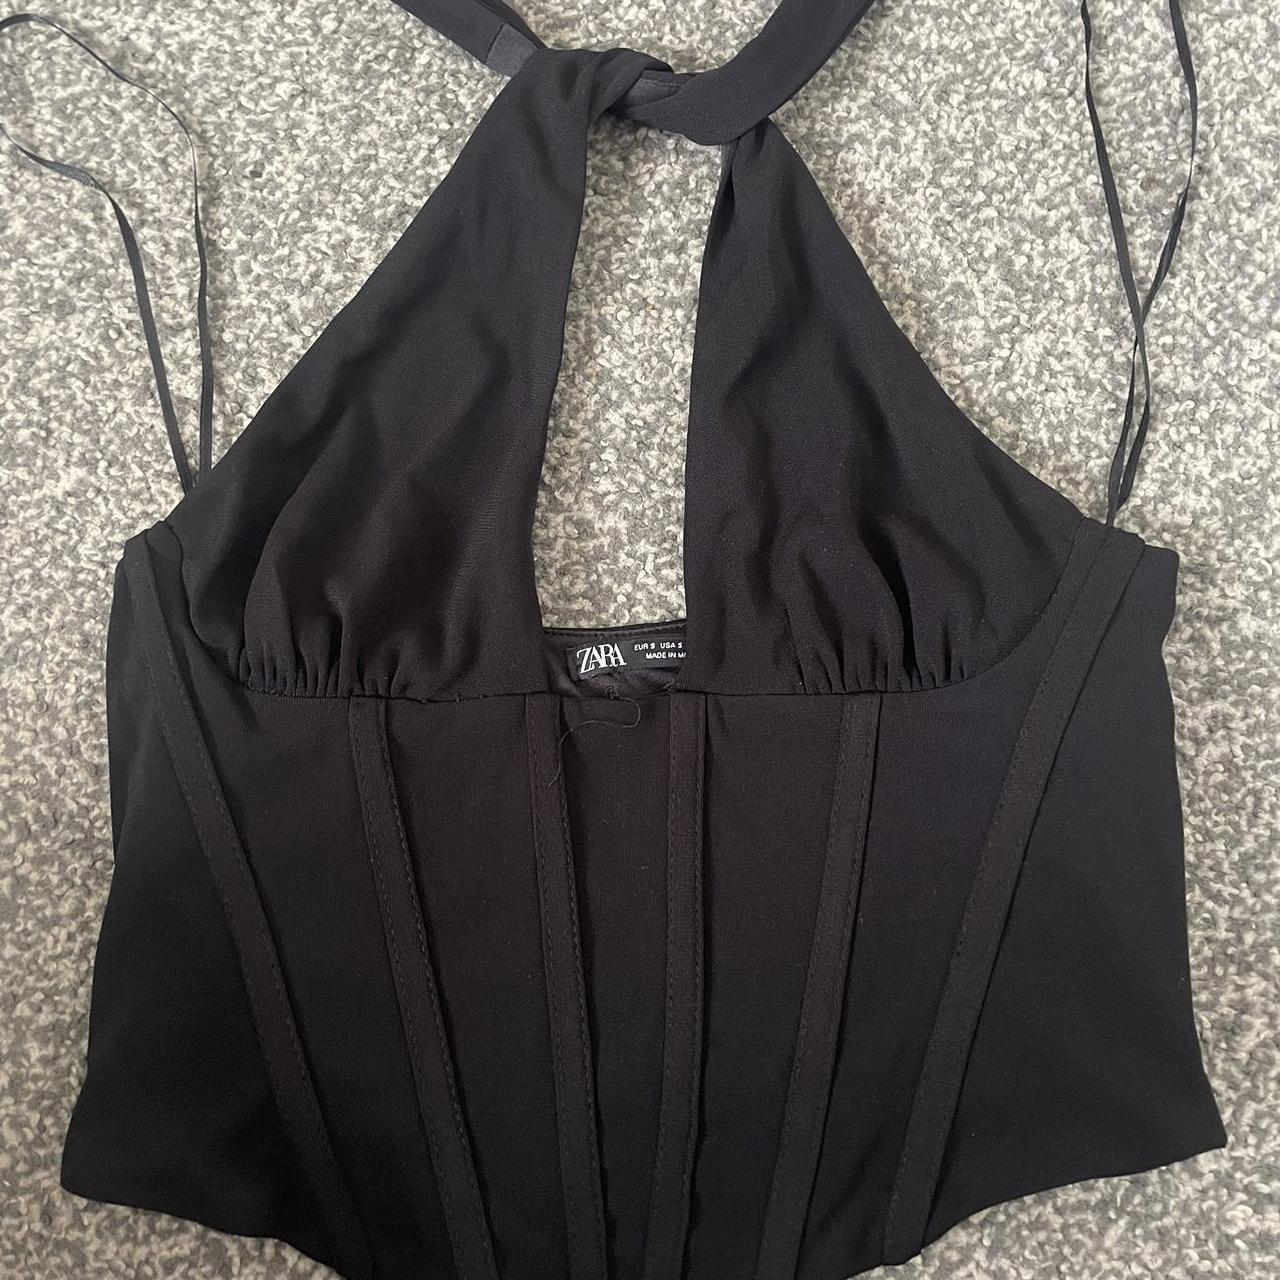 Zara corset top black Size small Never worn... - Depop